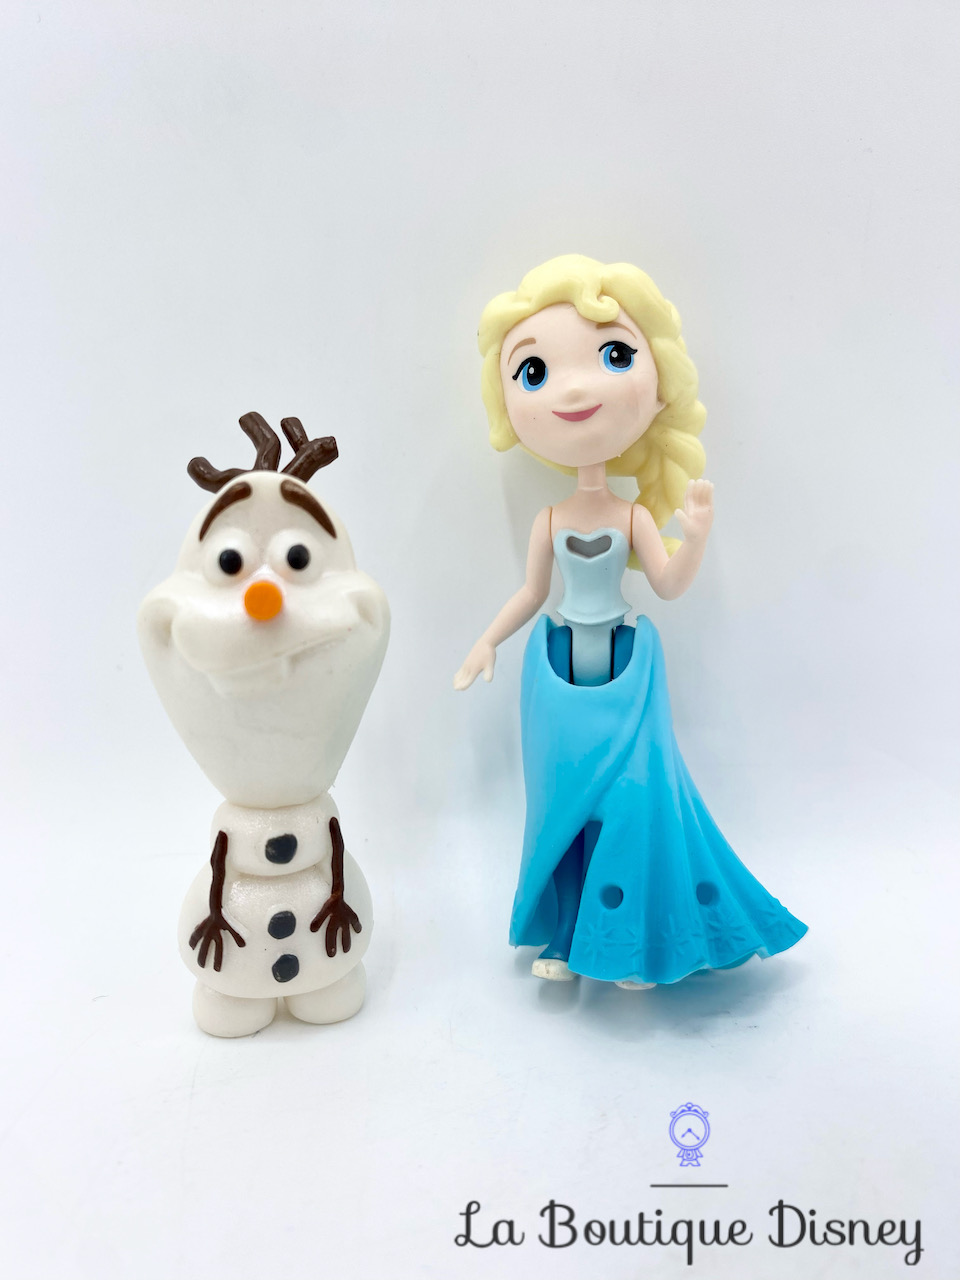 figurine-little-kingdom-elsa-olaf-disney-hasbro-frozen-polly-clip-2